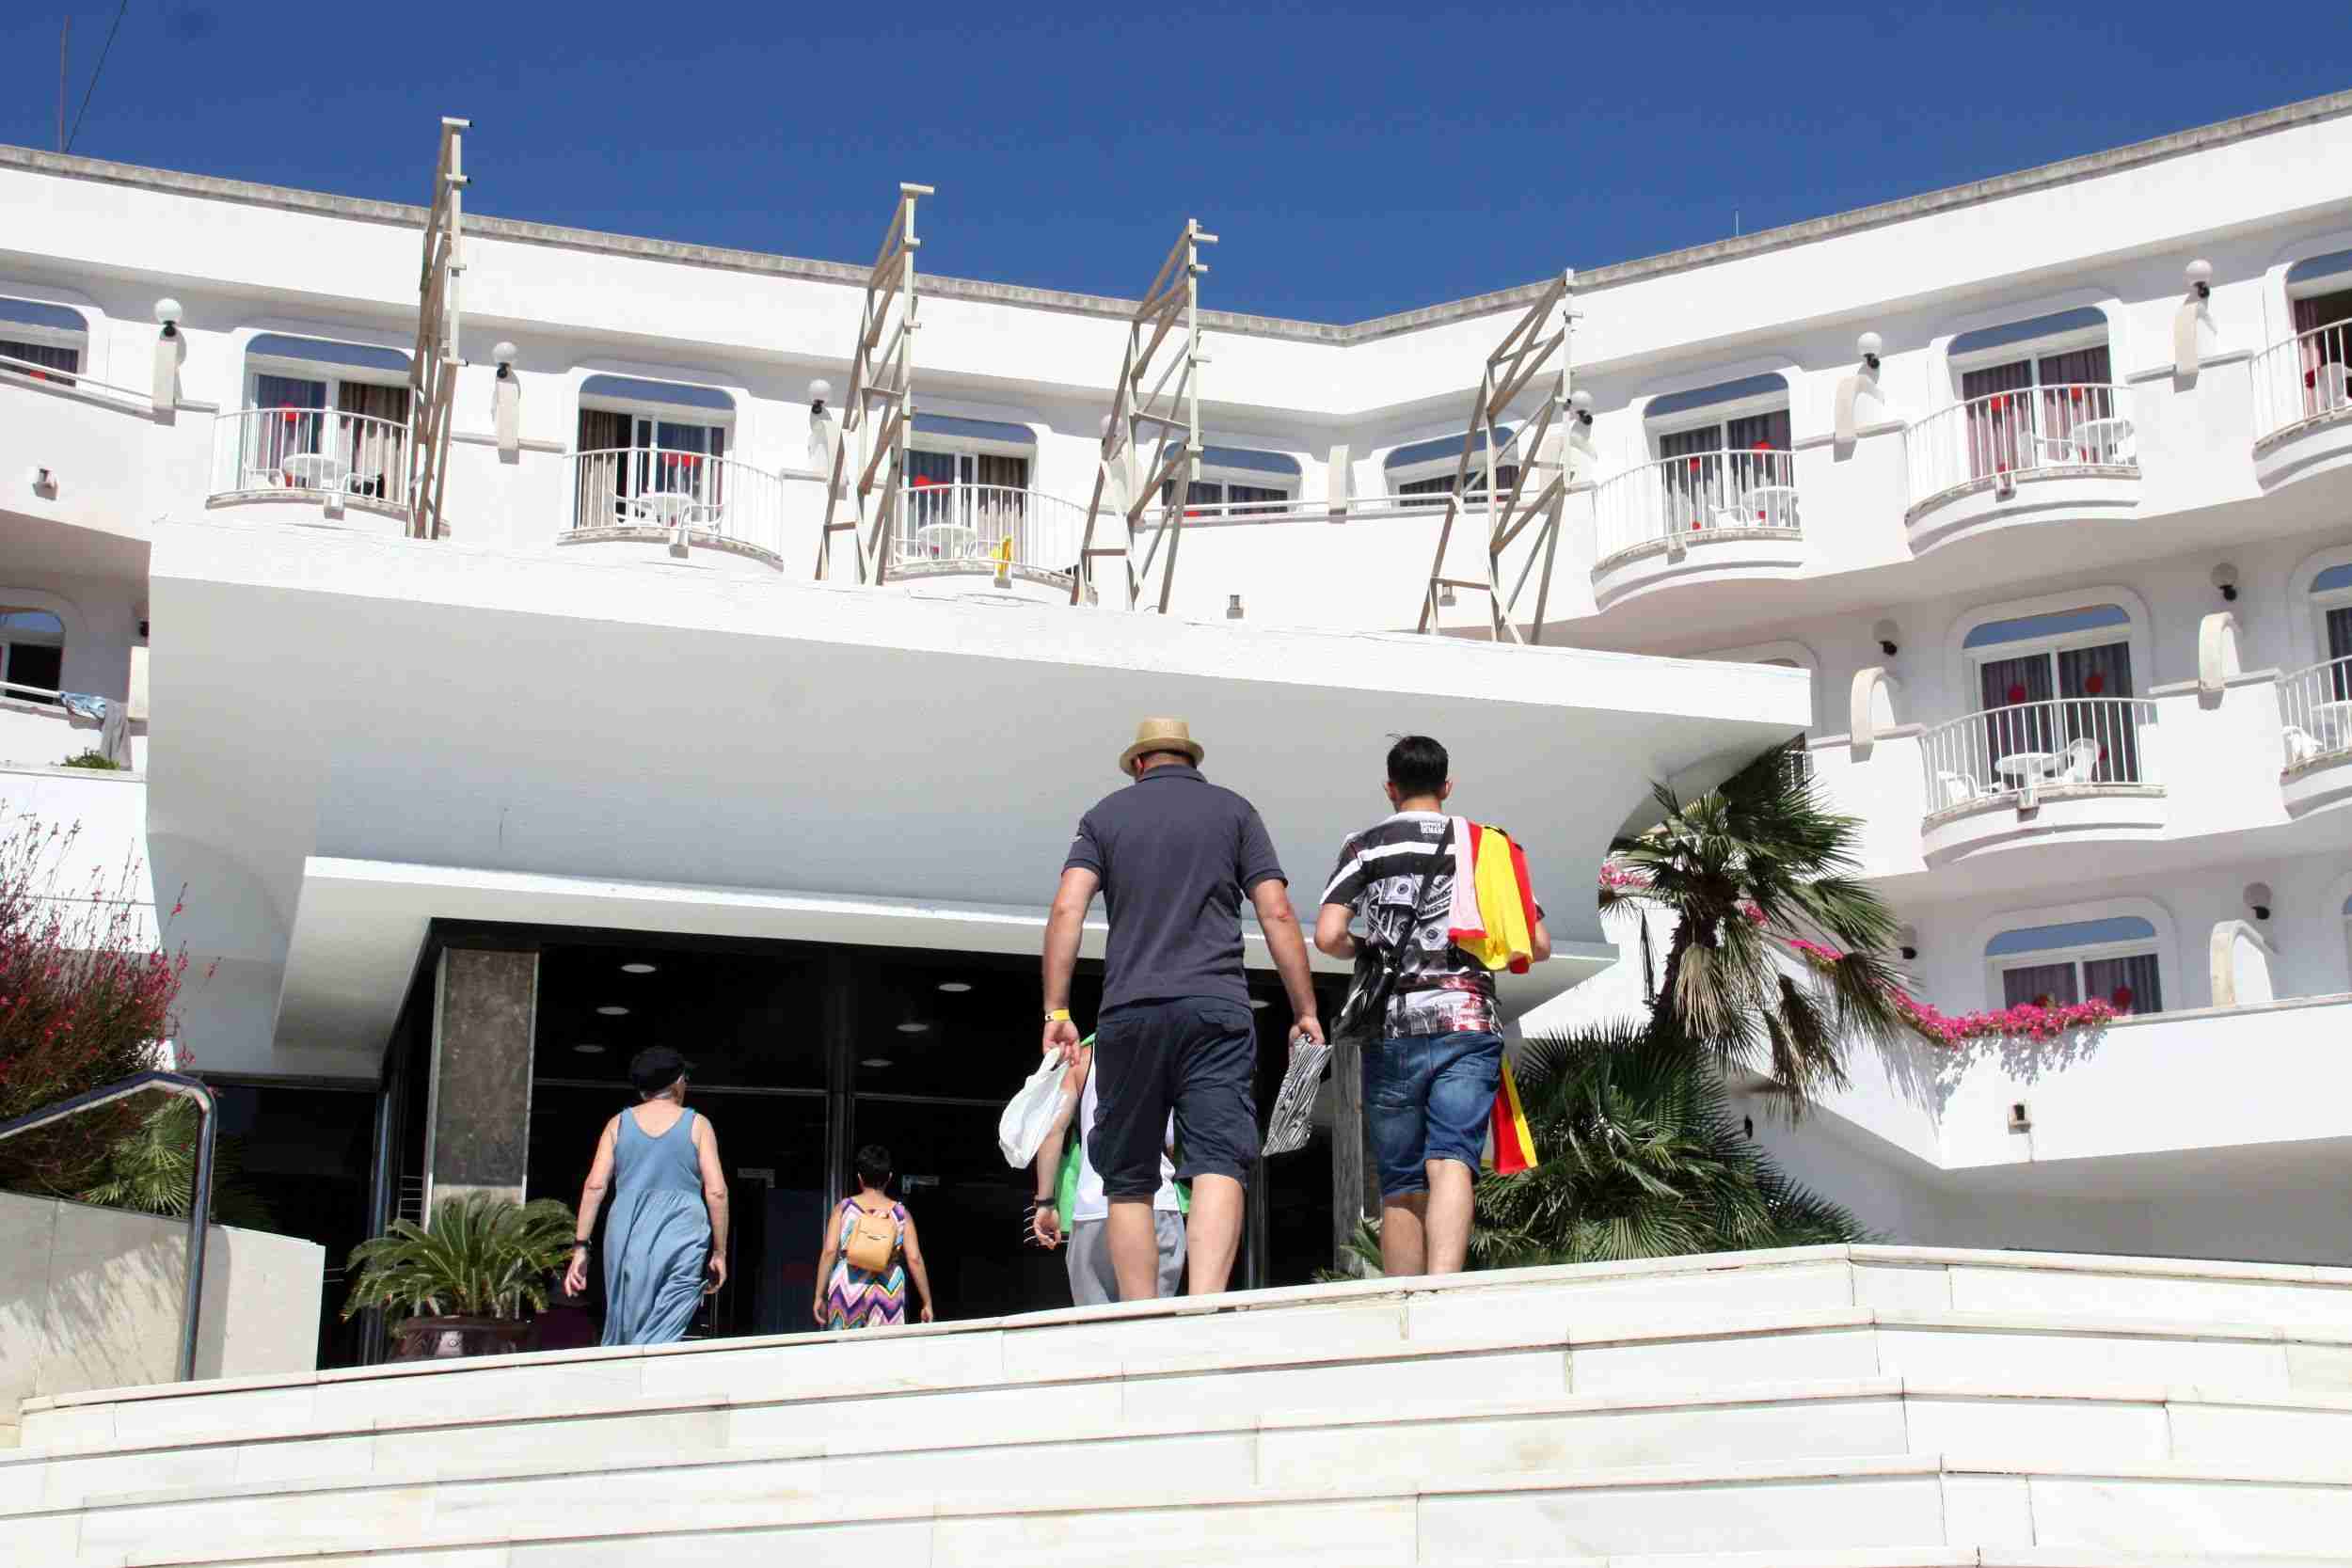 El hotel Marina Sand de Lloret de Mar también pirateaba el gas